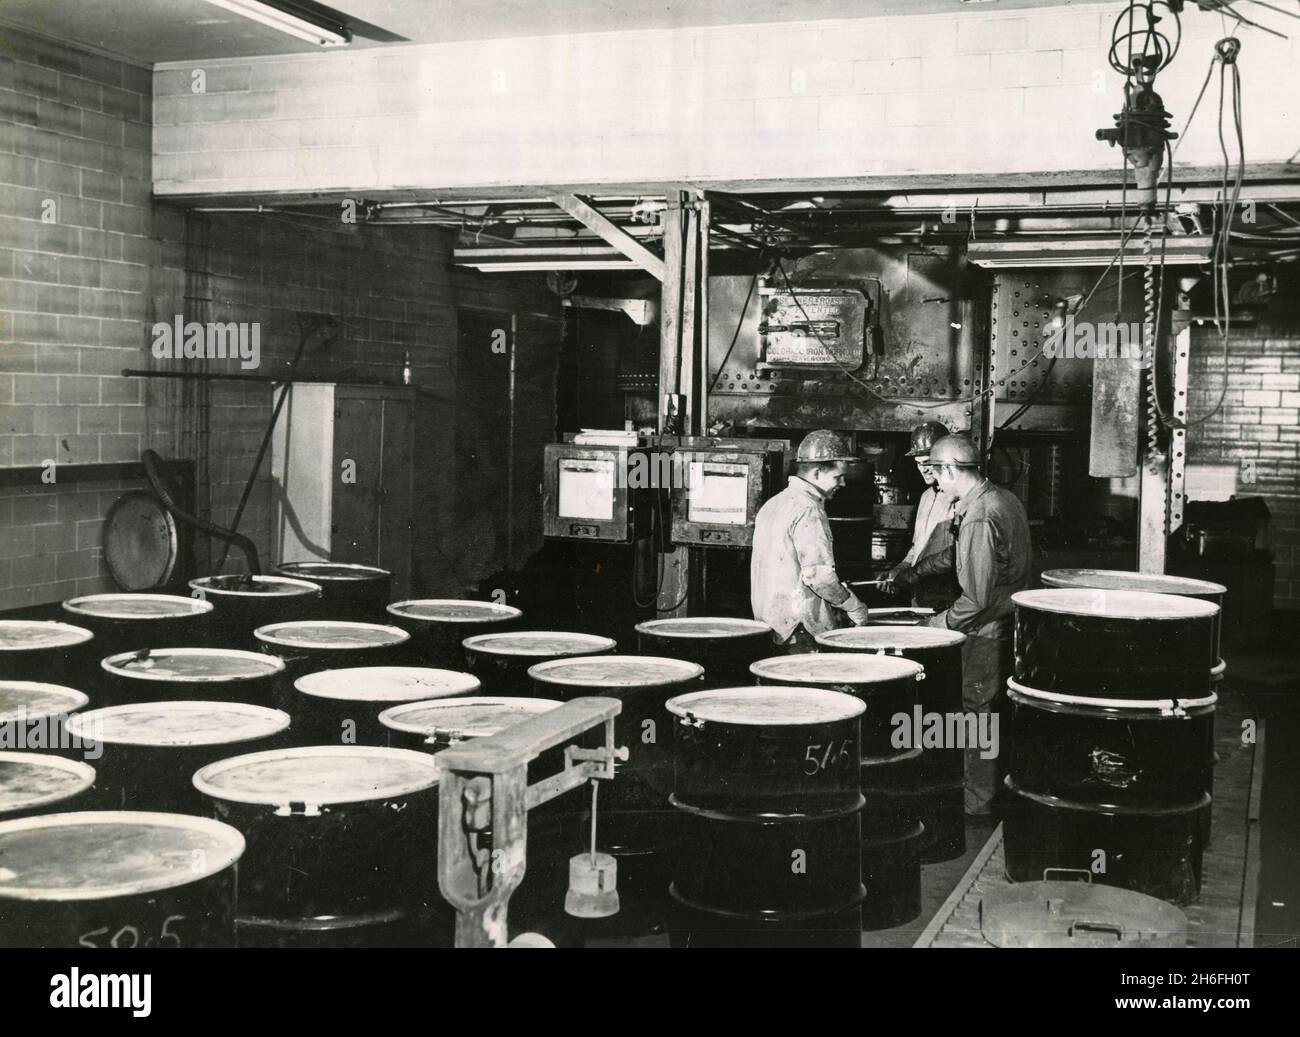 Erzaufbereitung während des Uranbergbaus bei der Vitro Corporation of America, Salt Lake City, Utah, USA 1958 Stockfoto